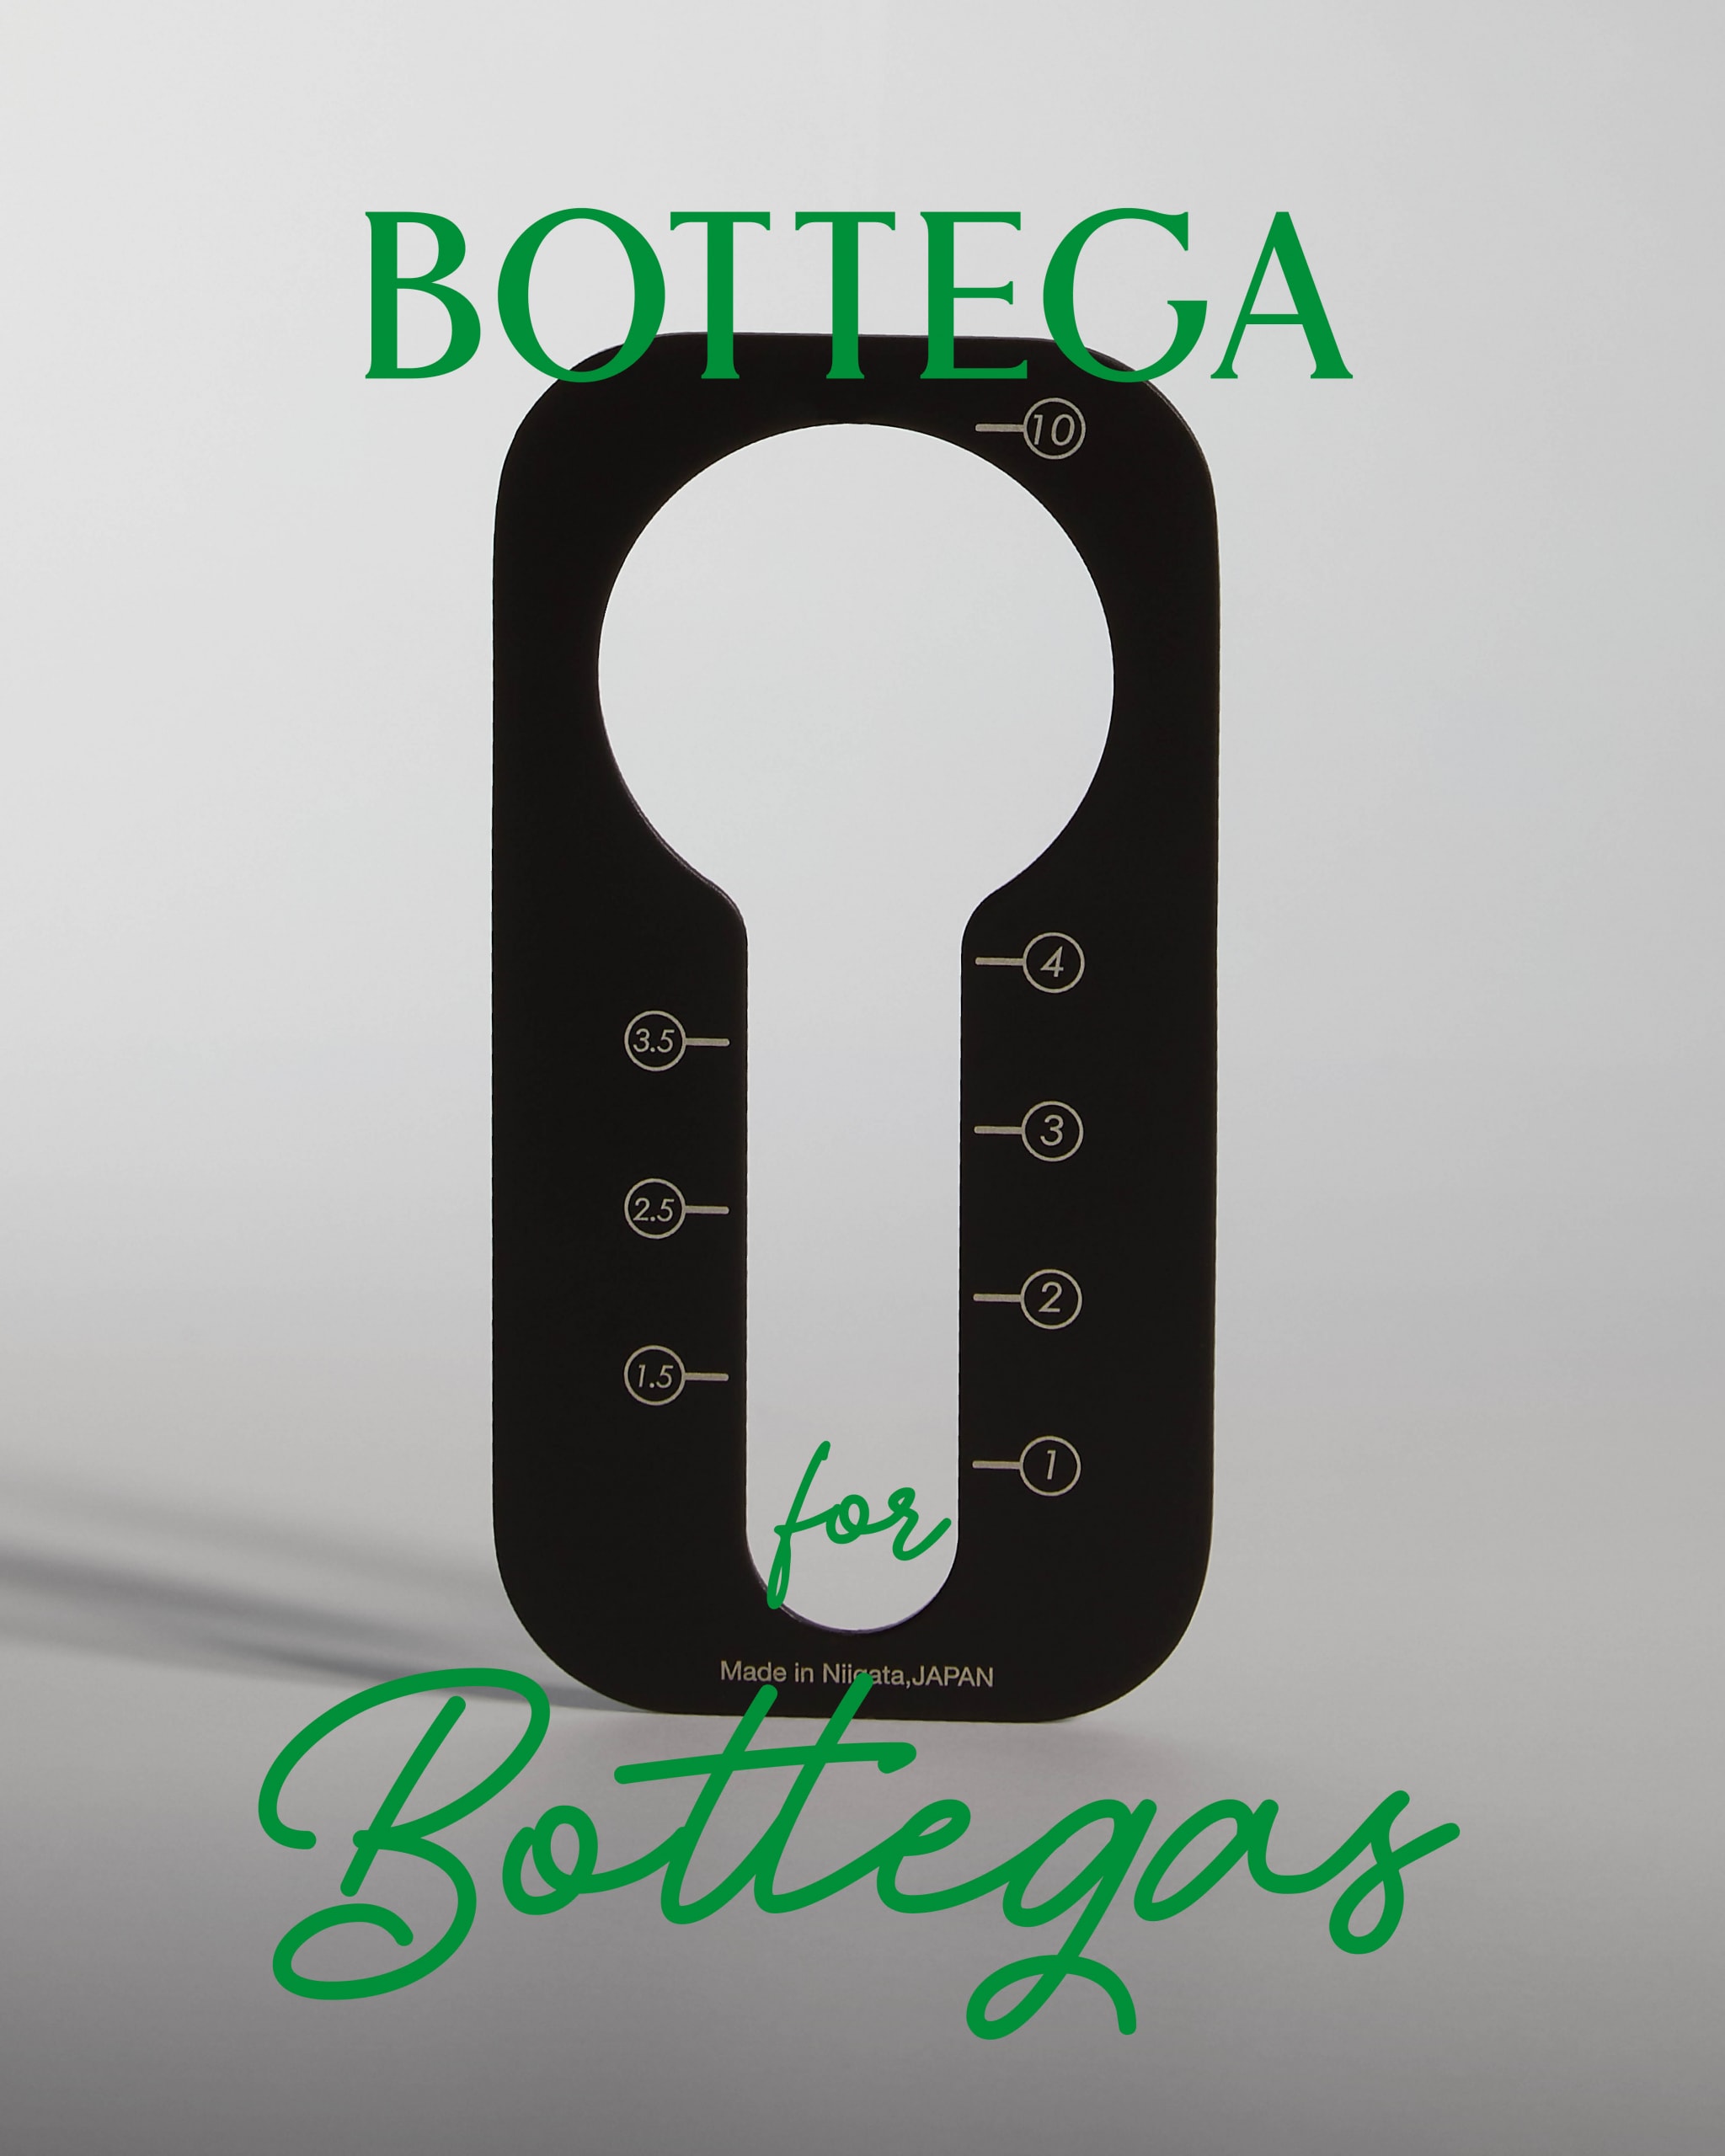 BOTTEGA VENETA 推出 「BOTTEGA FOR BOTTEGAS」企划